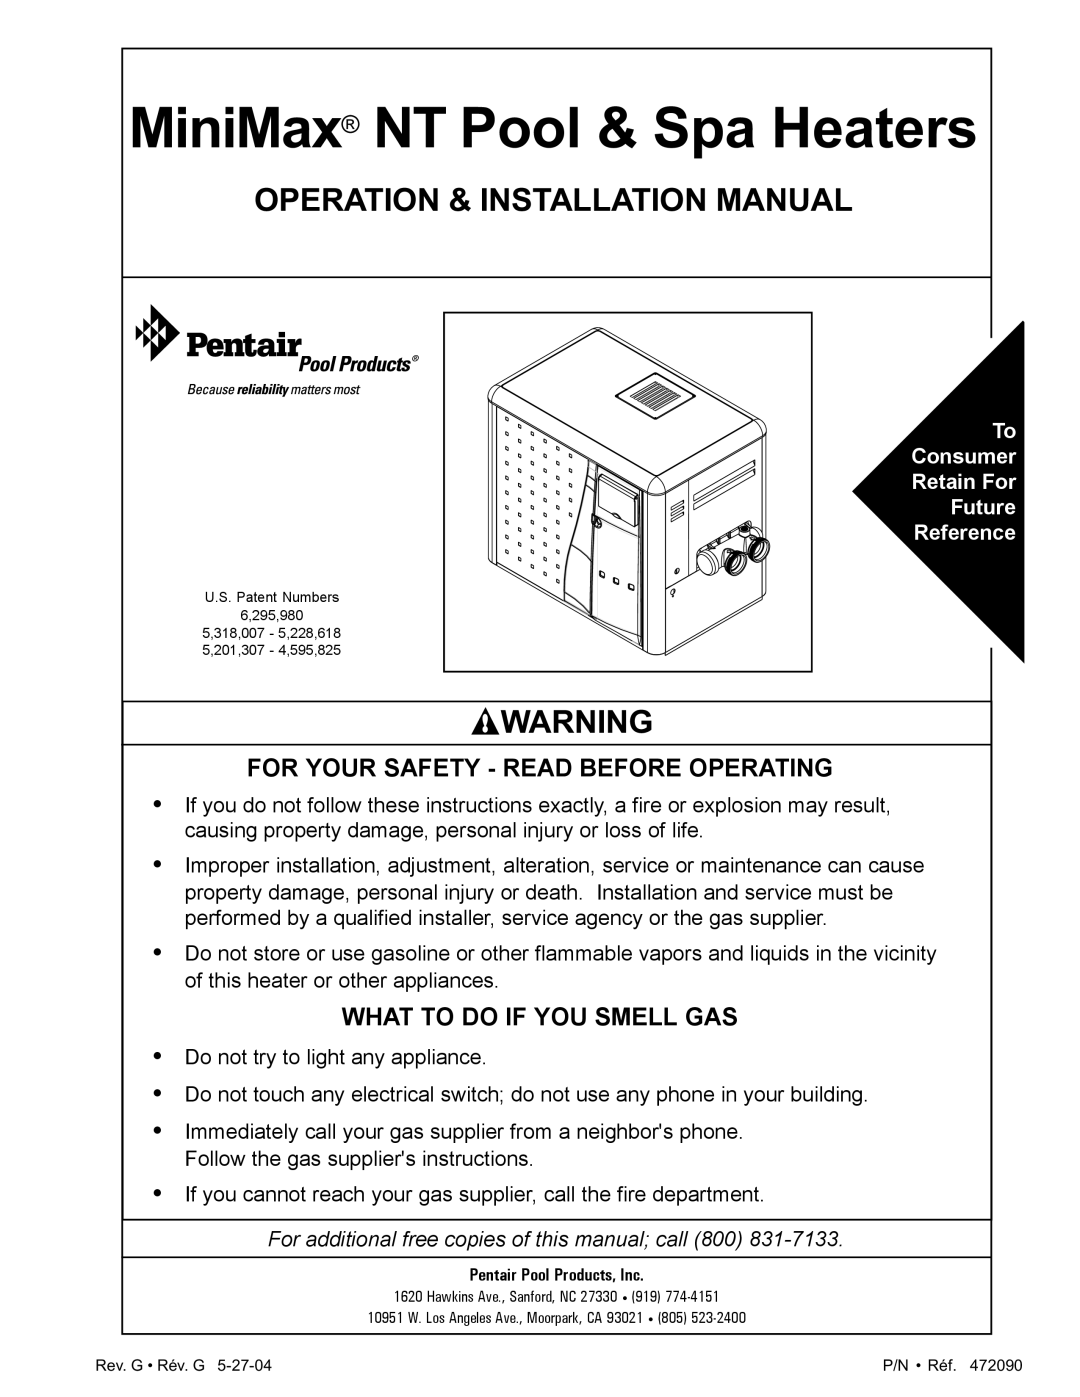 Pentair 200 installation manual MiniMax NT Pool & Spa Heaters 